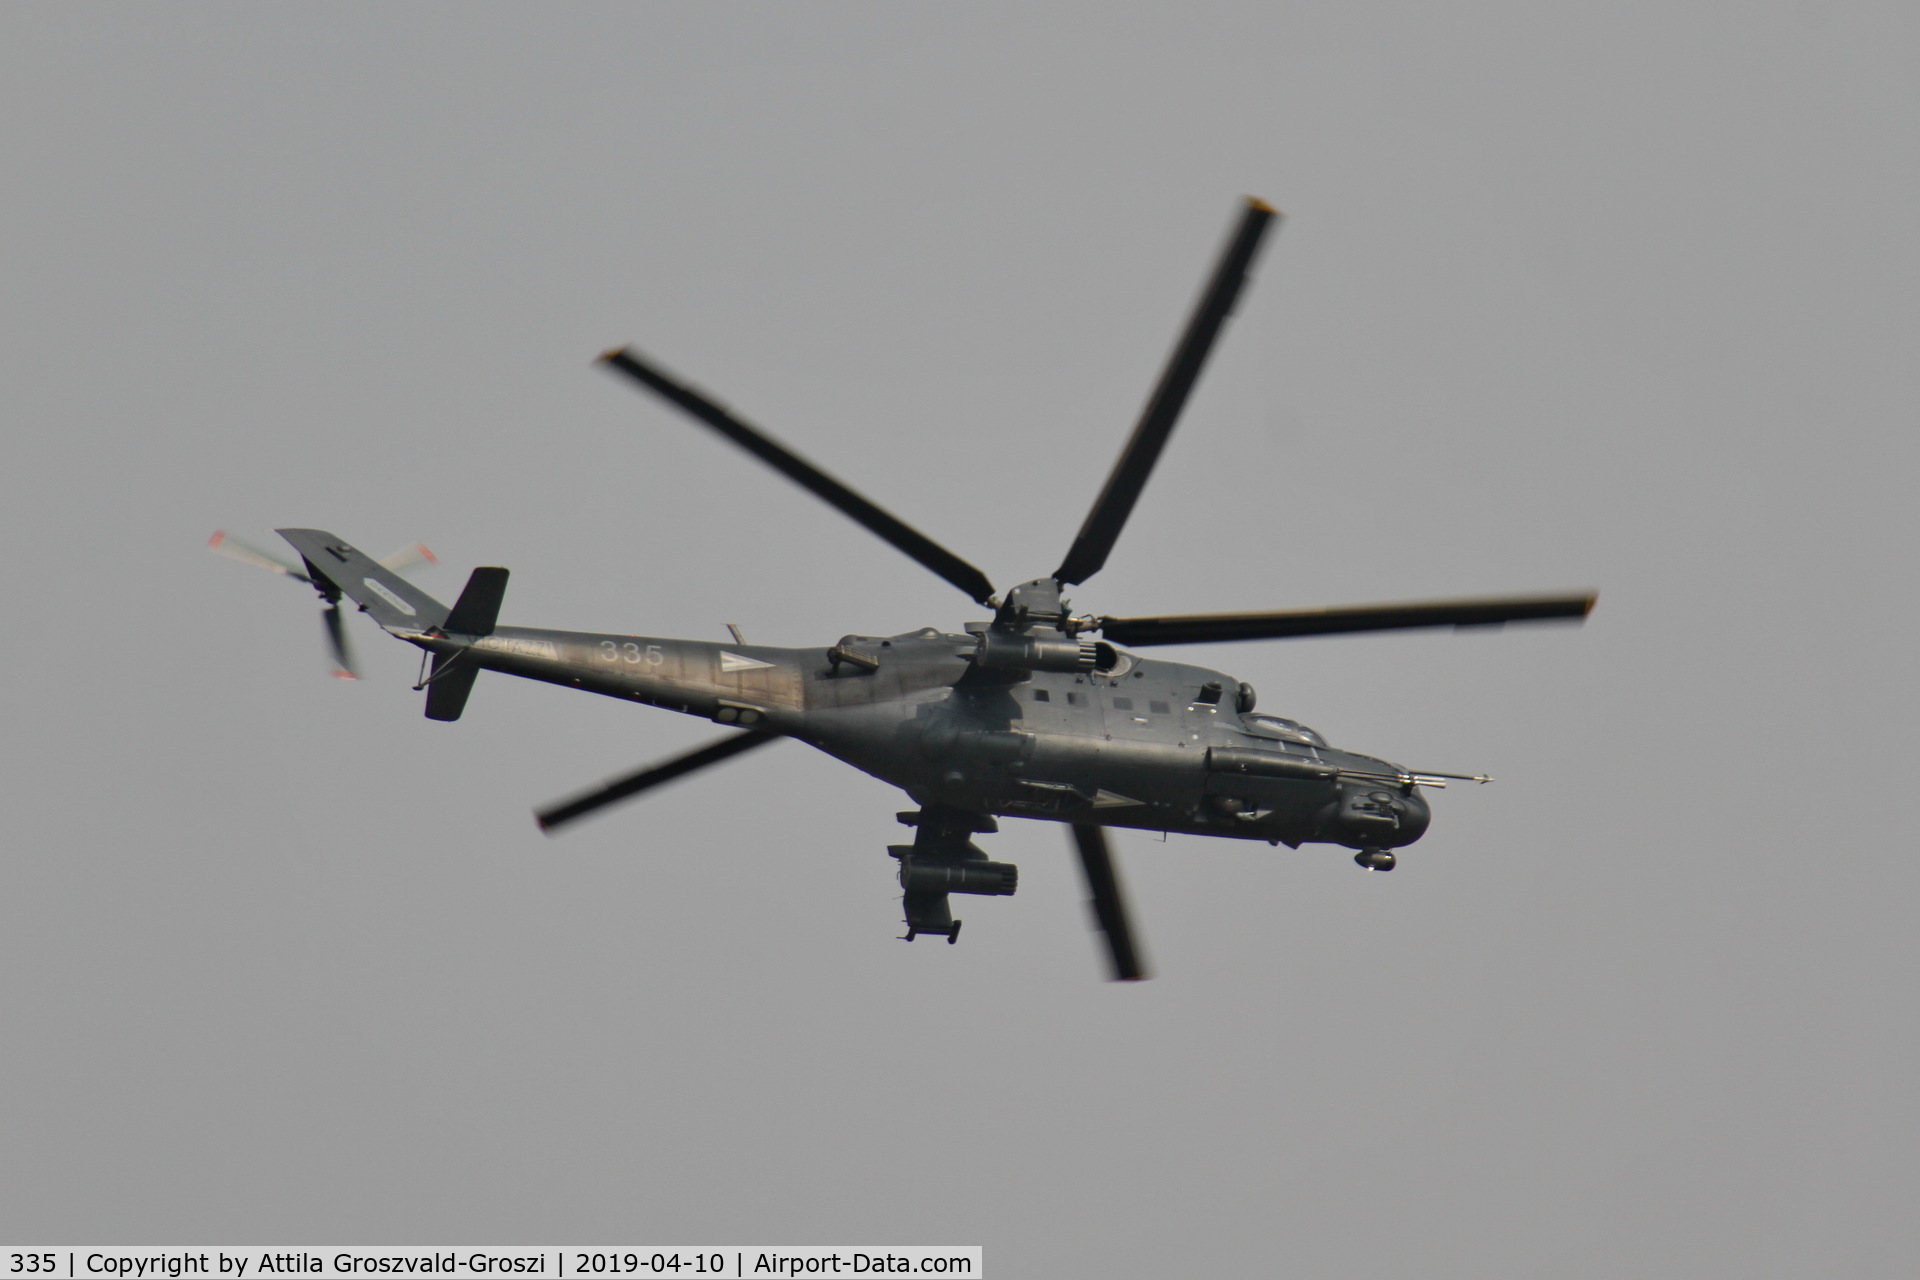 335, 1989 Mil Mi-24P Hind F C/N 340335, Jutas-Ujmajor. The Hungarian airforce is his practising base